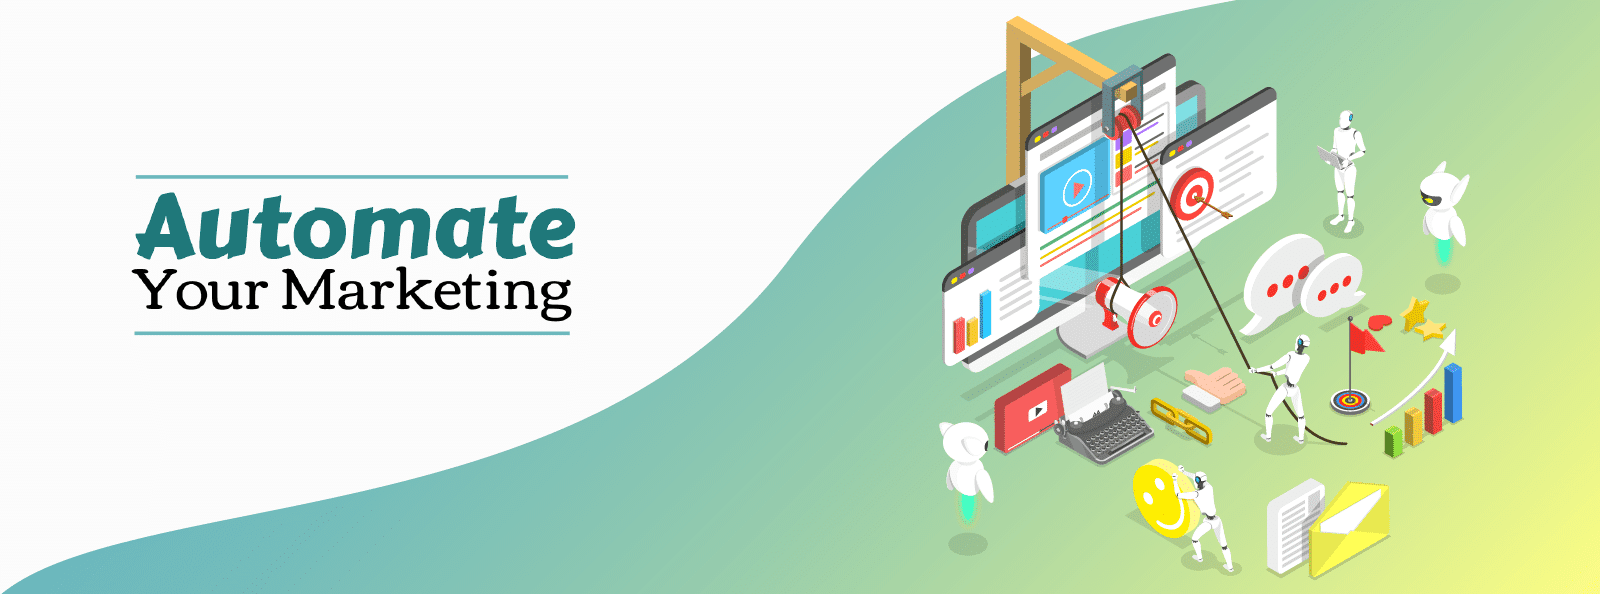 Automate-your-Marketing-TrainingWebsite-1600x594